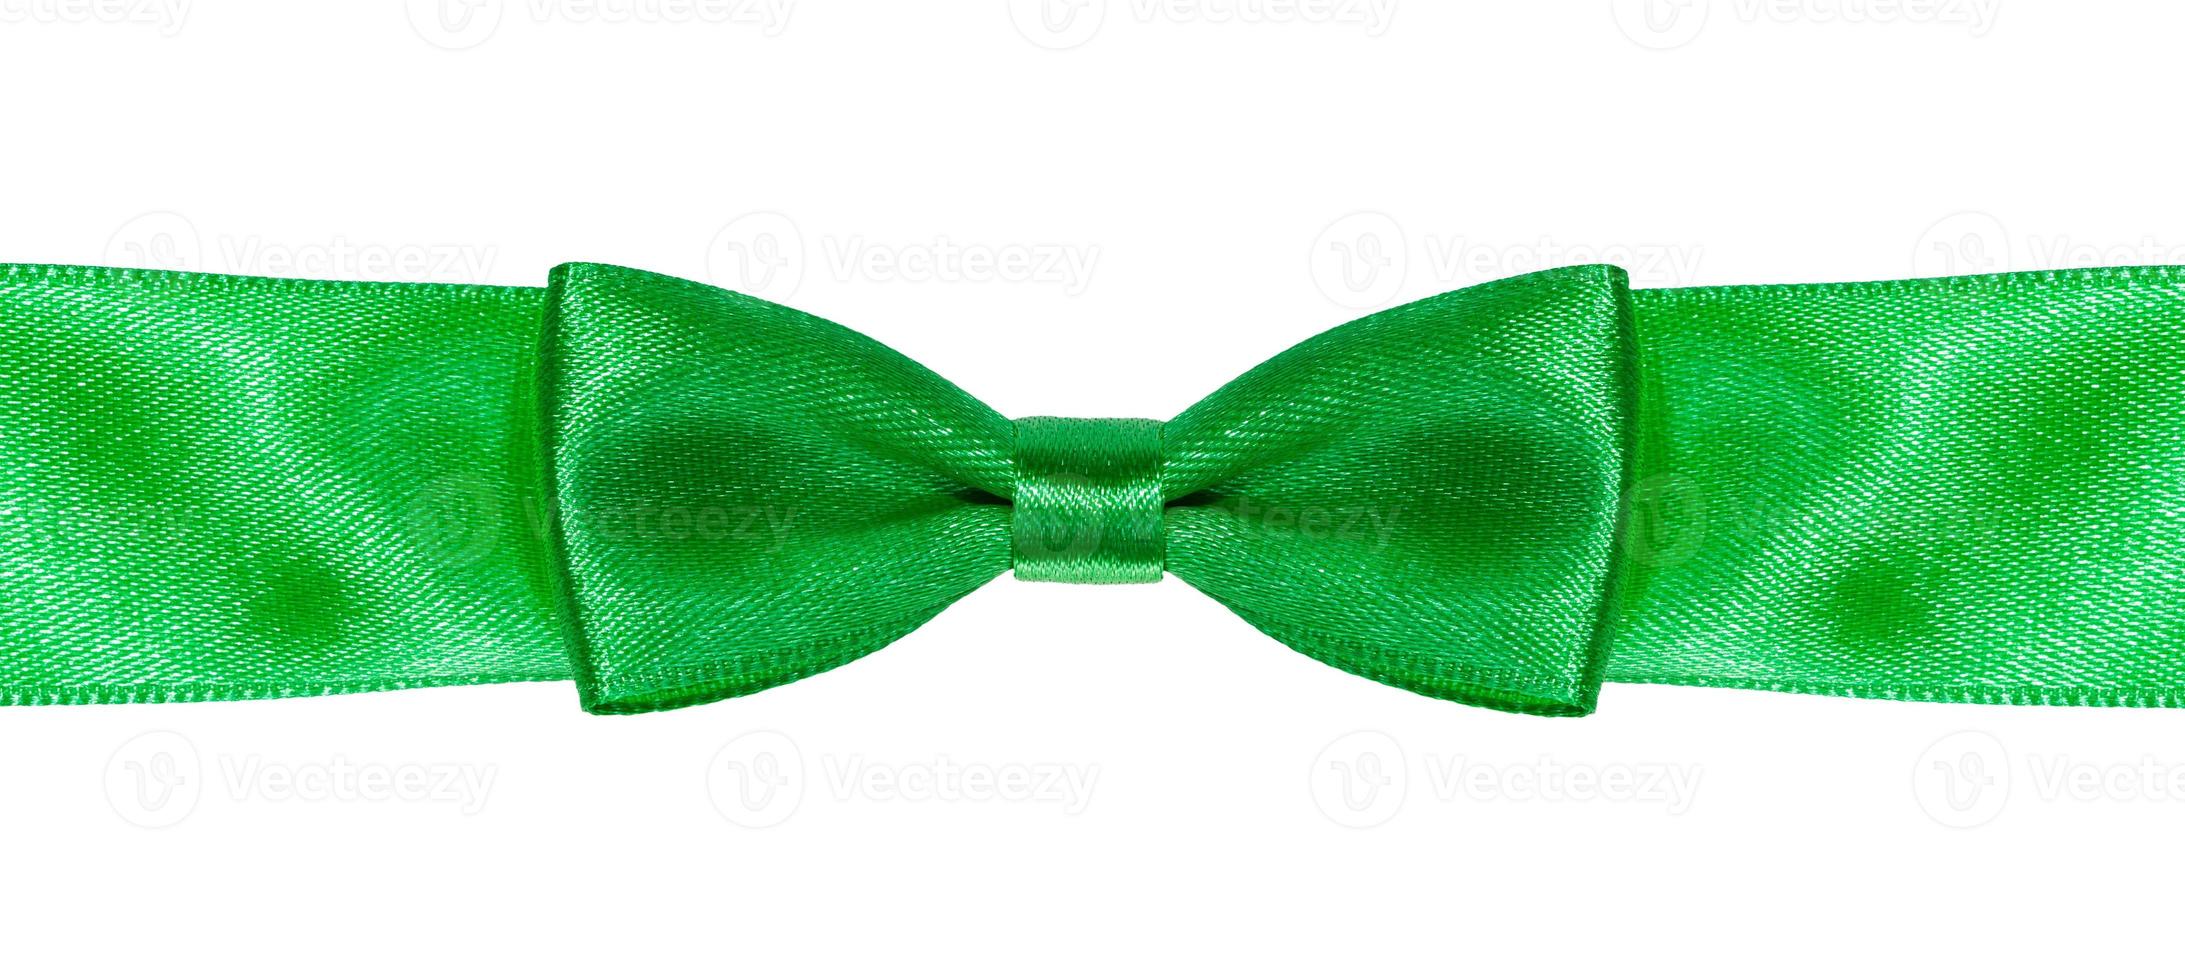 nudo de lazo simétrico en cinta de raso verde de cerca foto